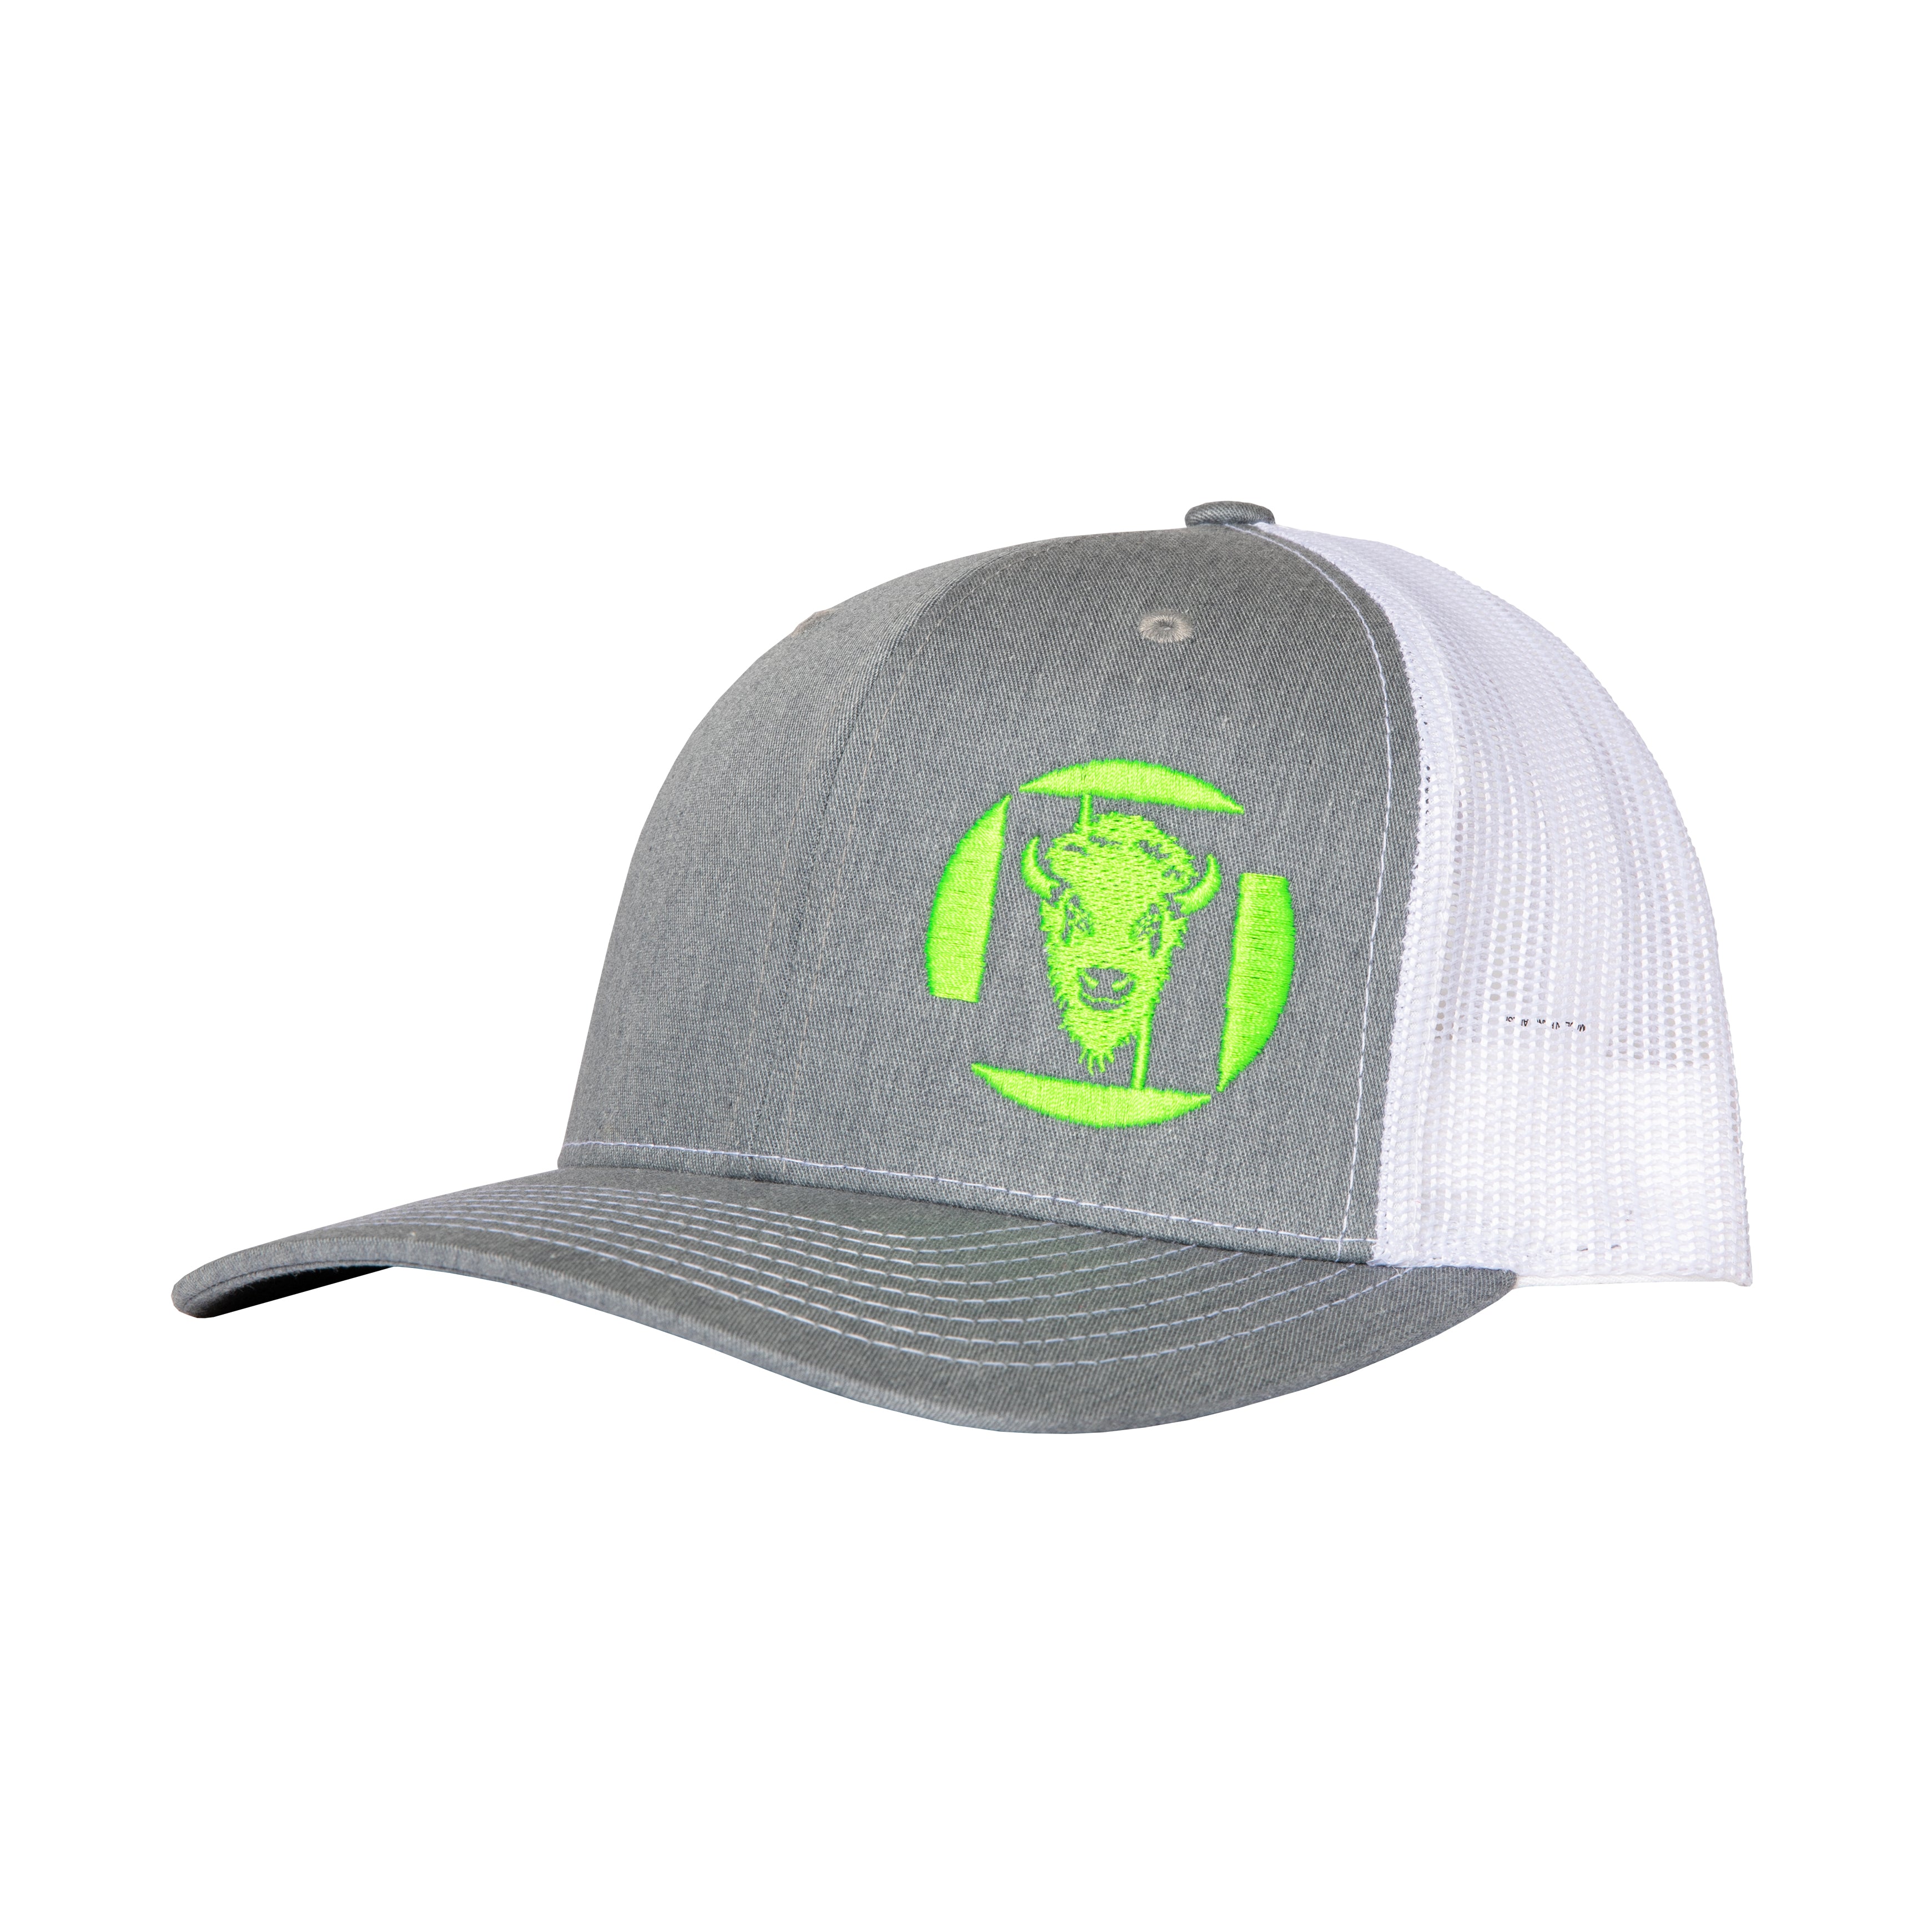 LT Logo Hat Grey Crown/Brim with White Mesh Back (4 logo color options)